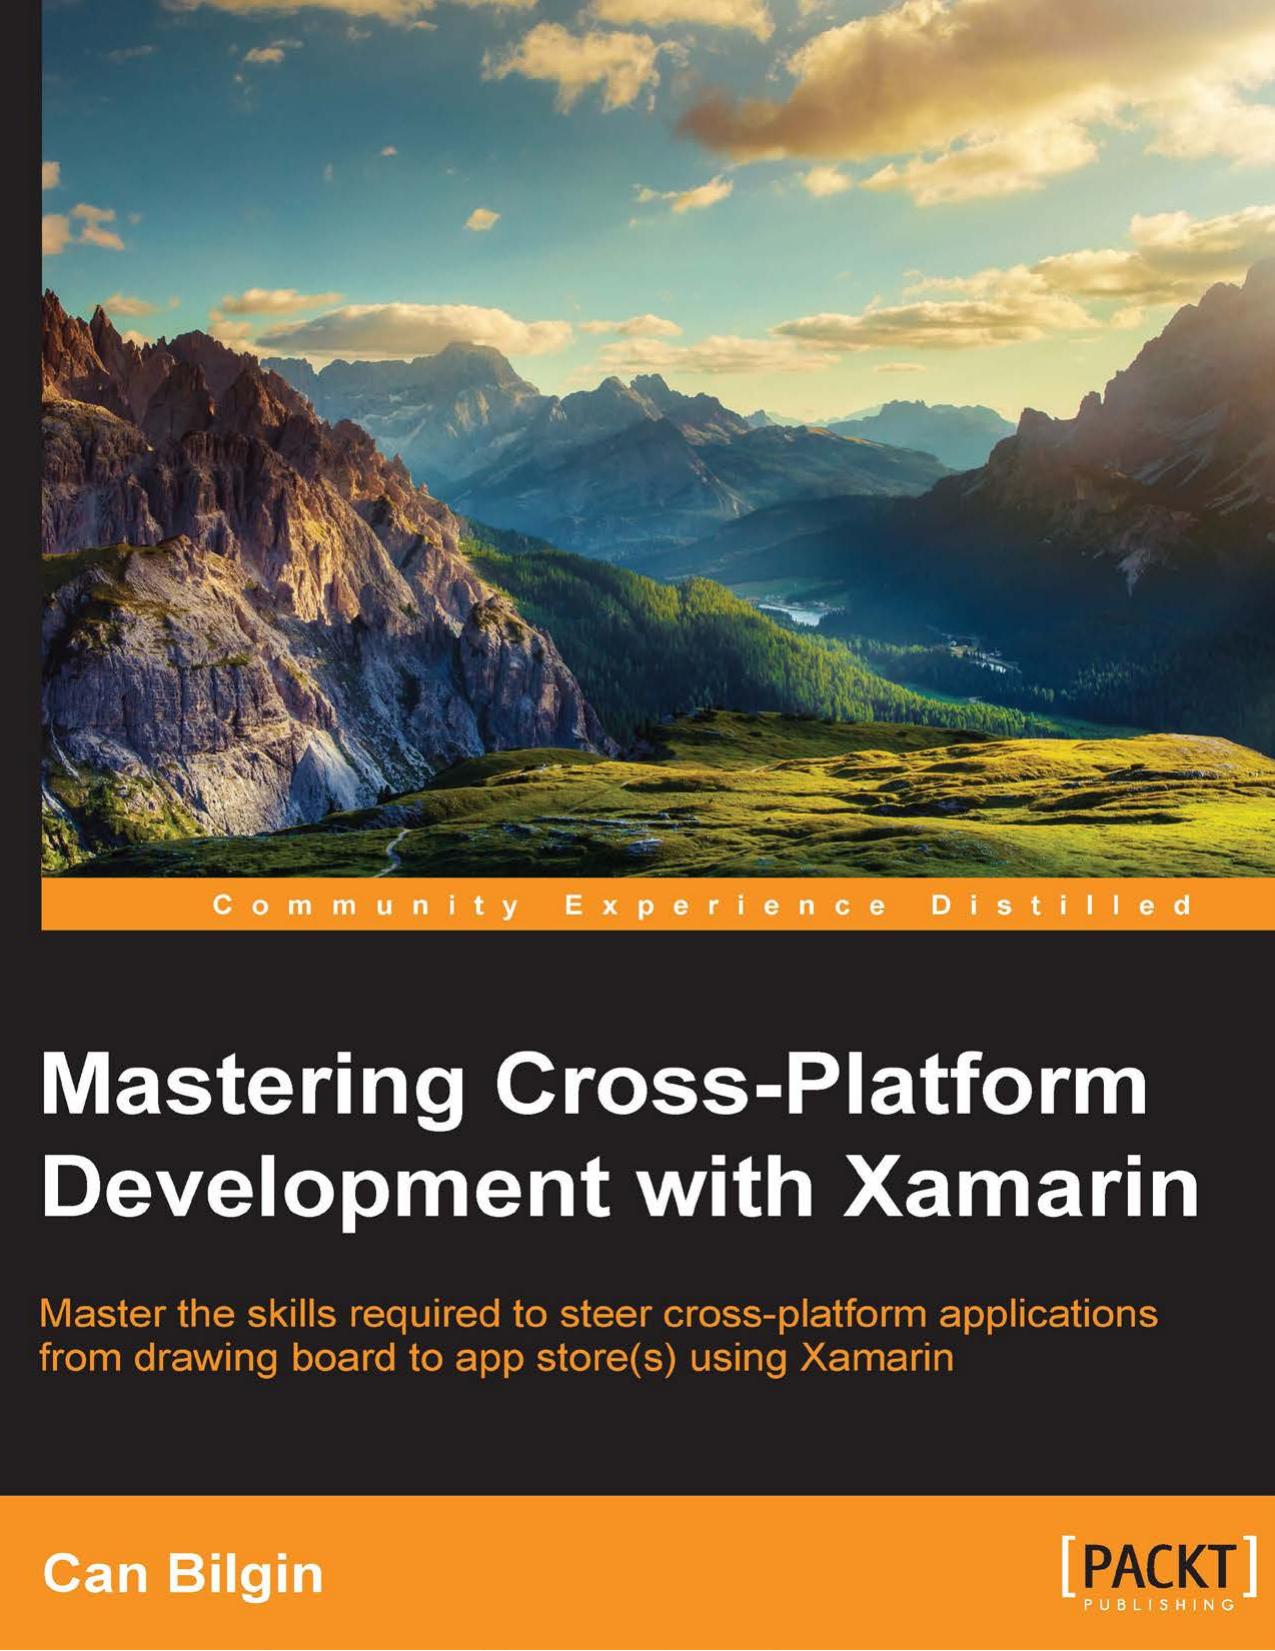 Mastering Cross-Platform Development with Xamarin by Can Bilgin